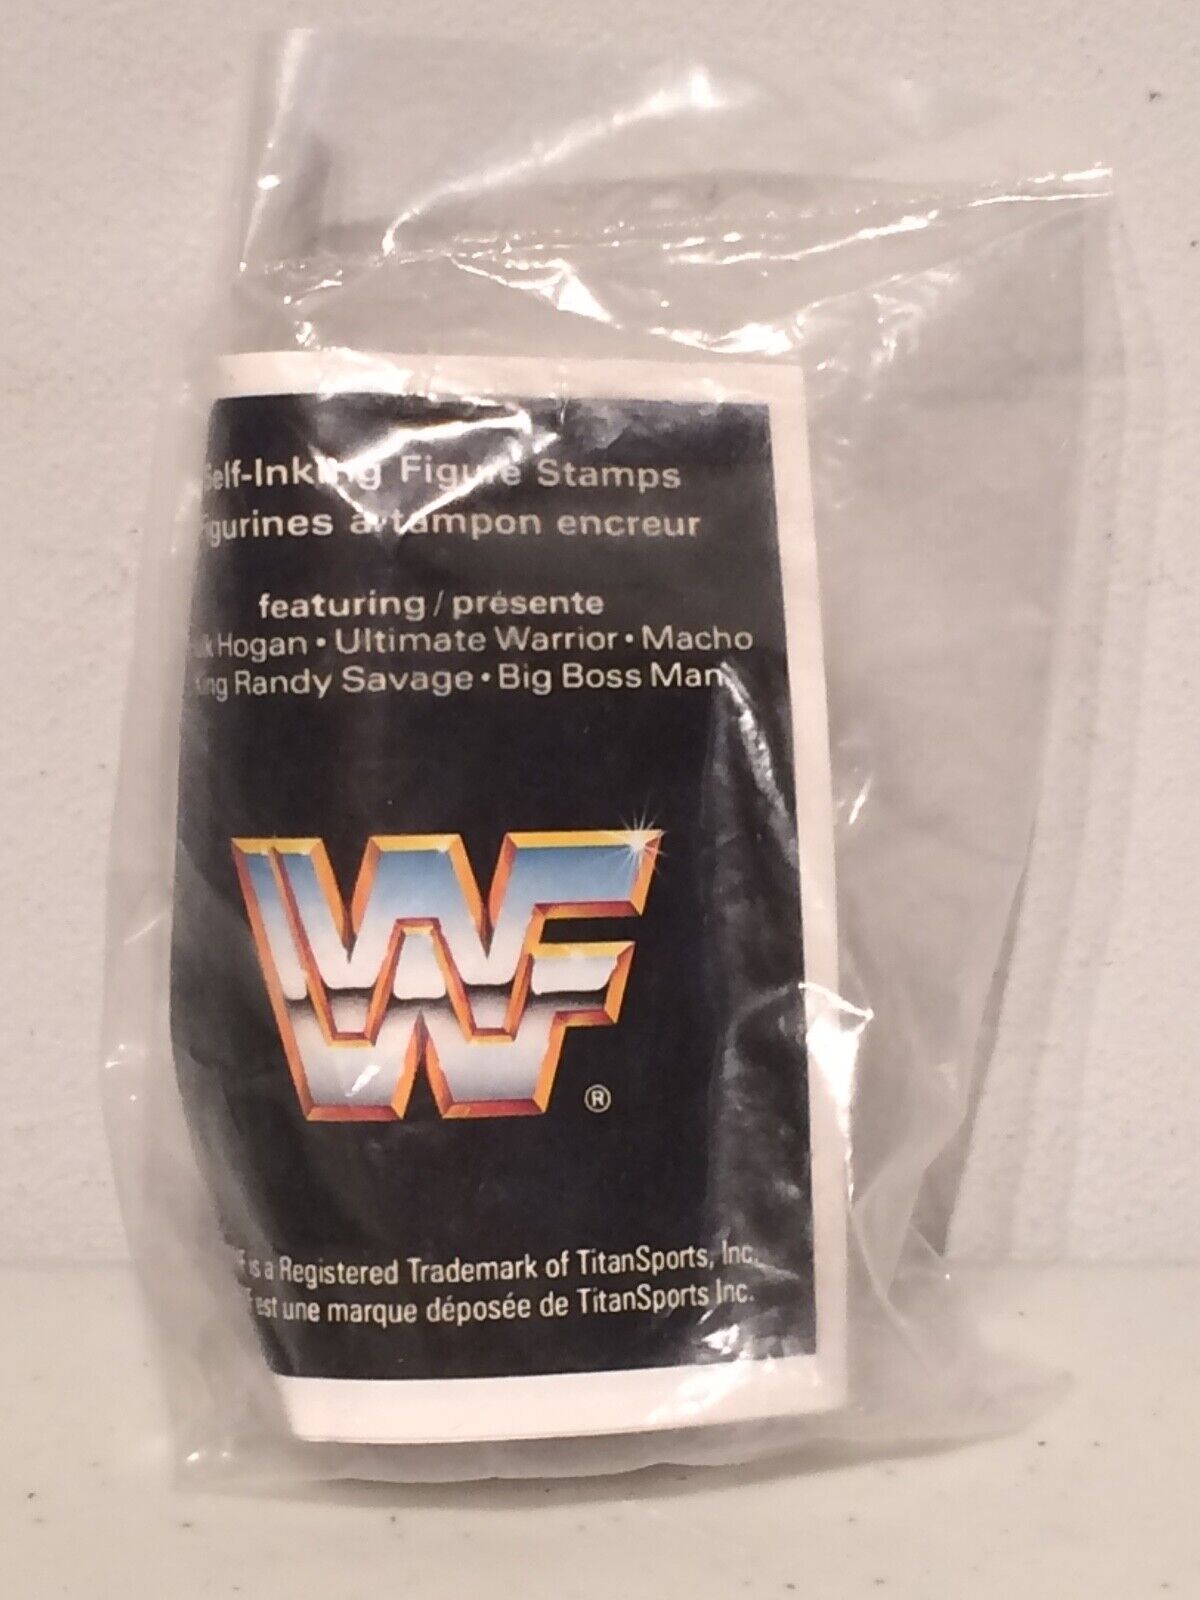 1990 WWF Titan Sports Ultimate Warrior Self-Inking Figure Stamp